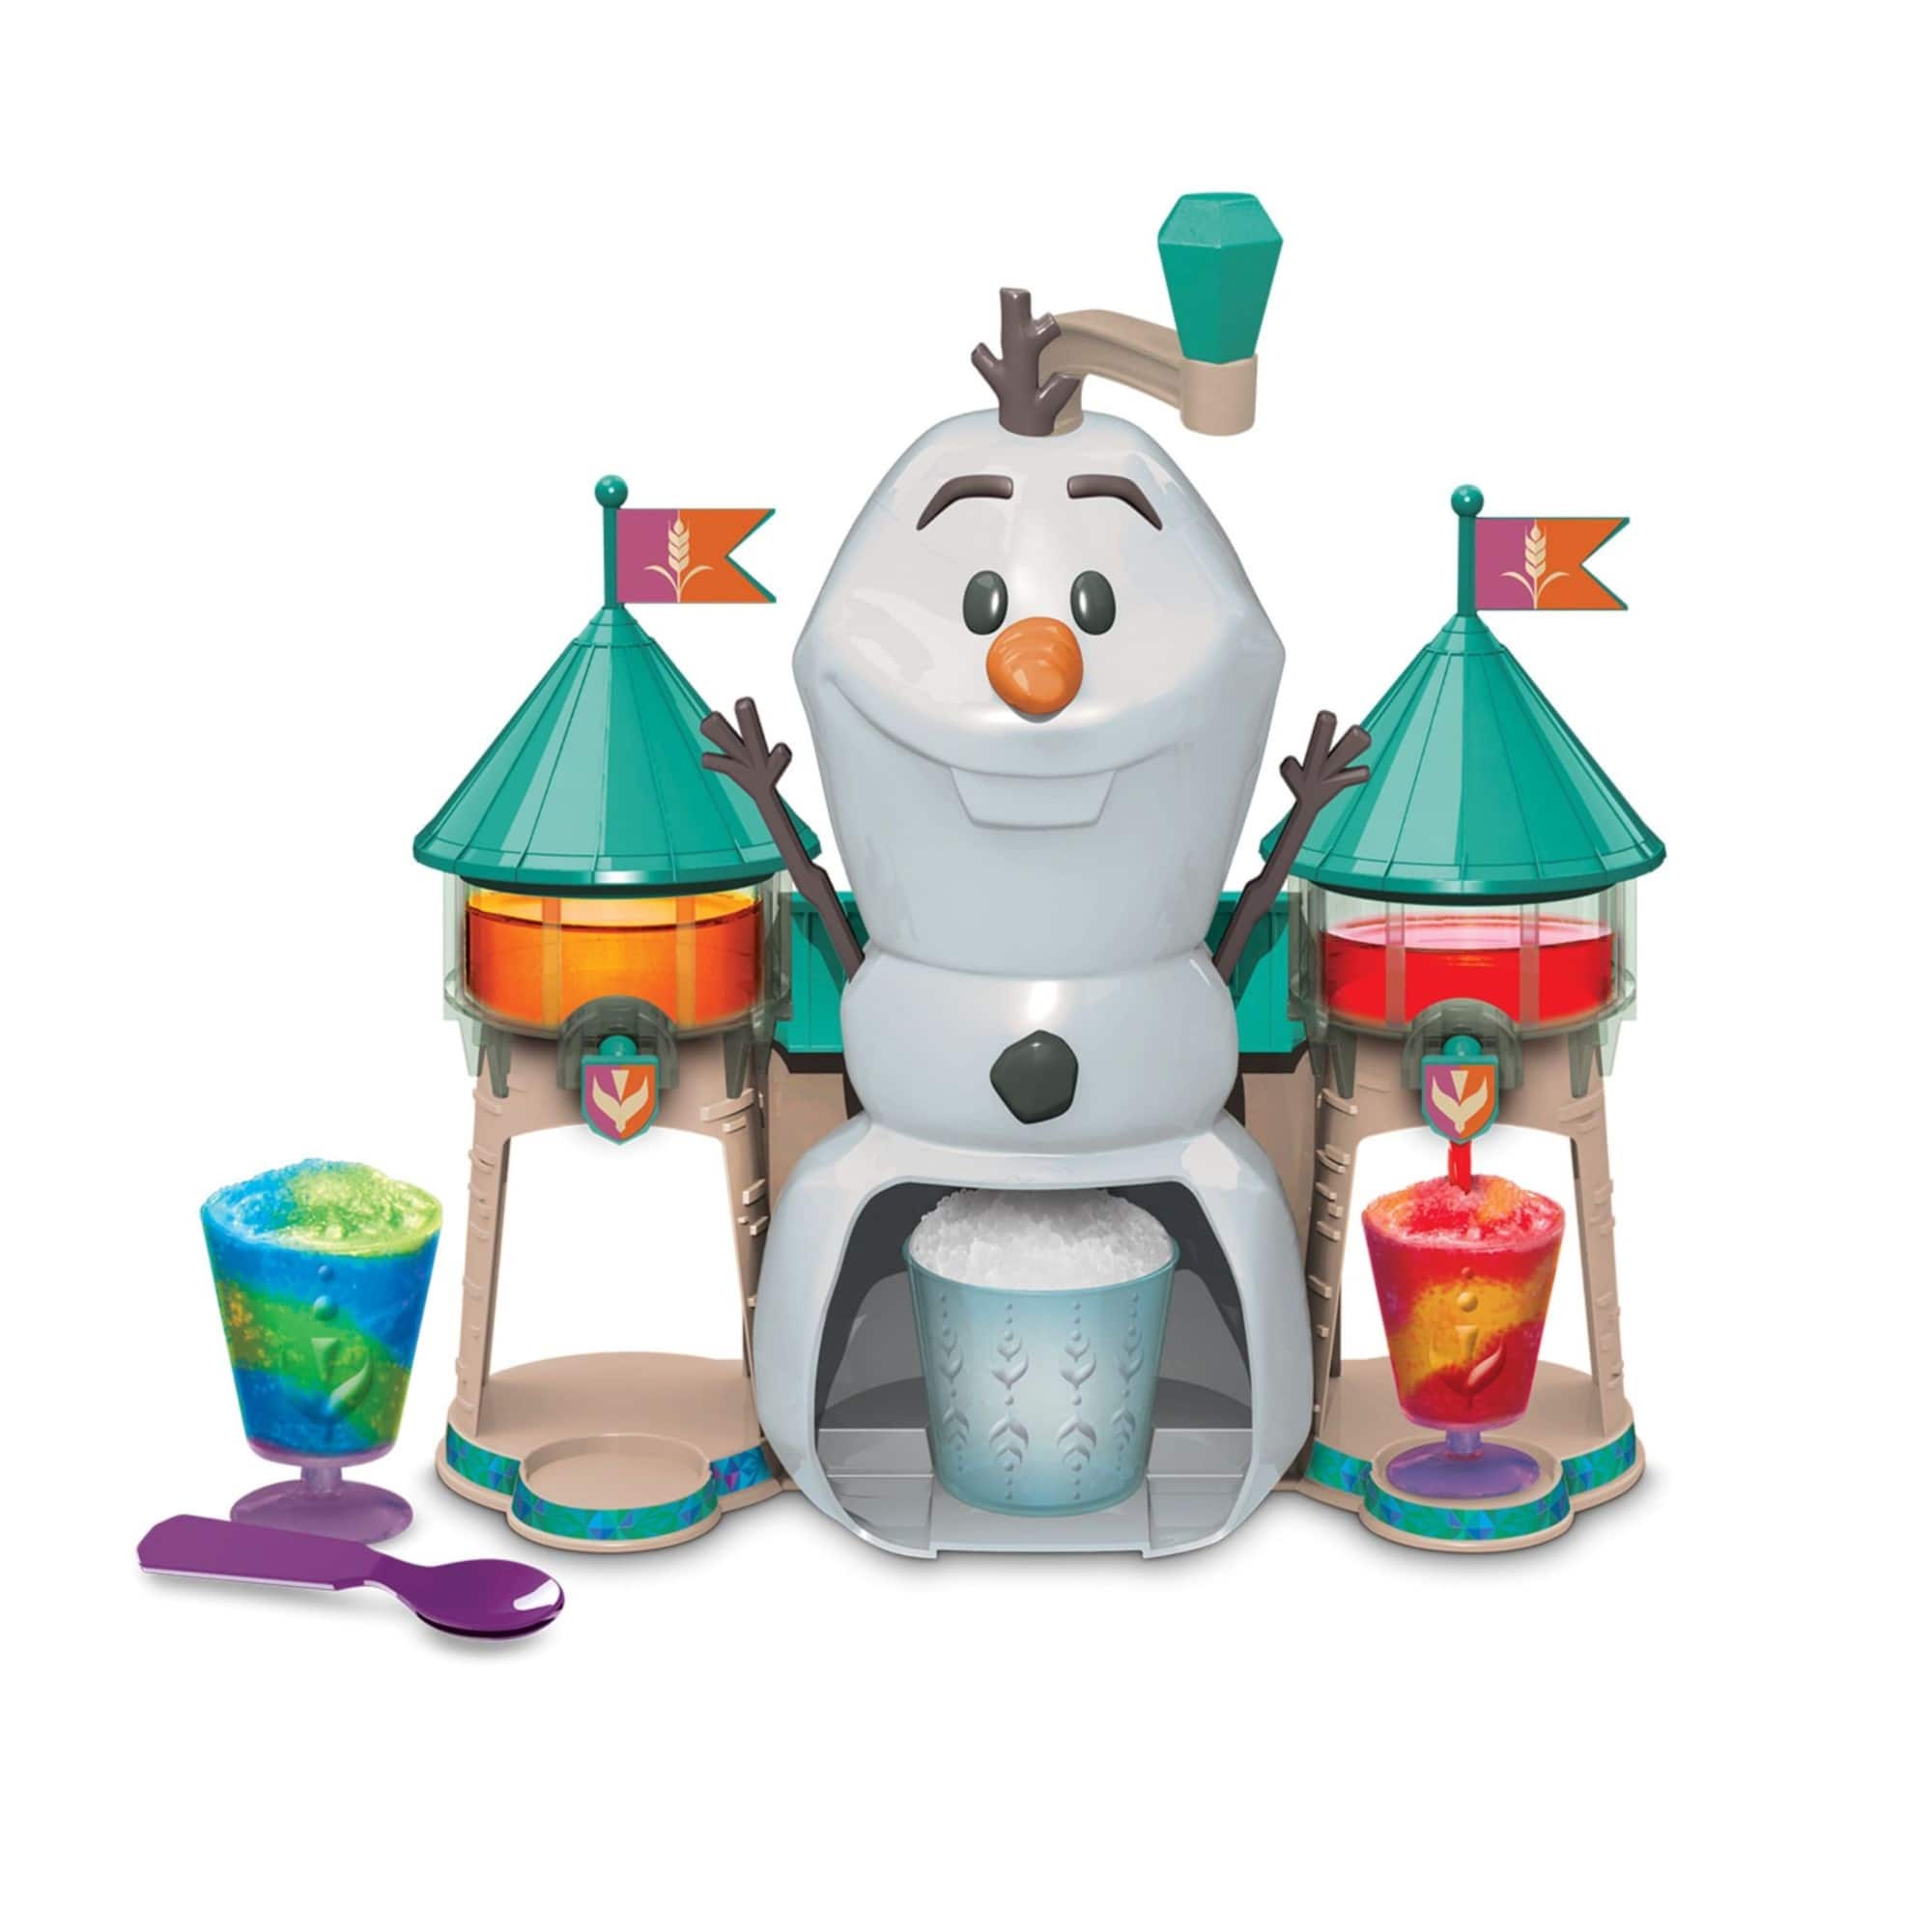 Disney Frozen 2 Olaf Plush Easter Halloween Gift Basket Handle White Snowman for sale online 